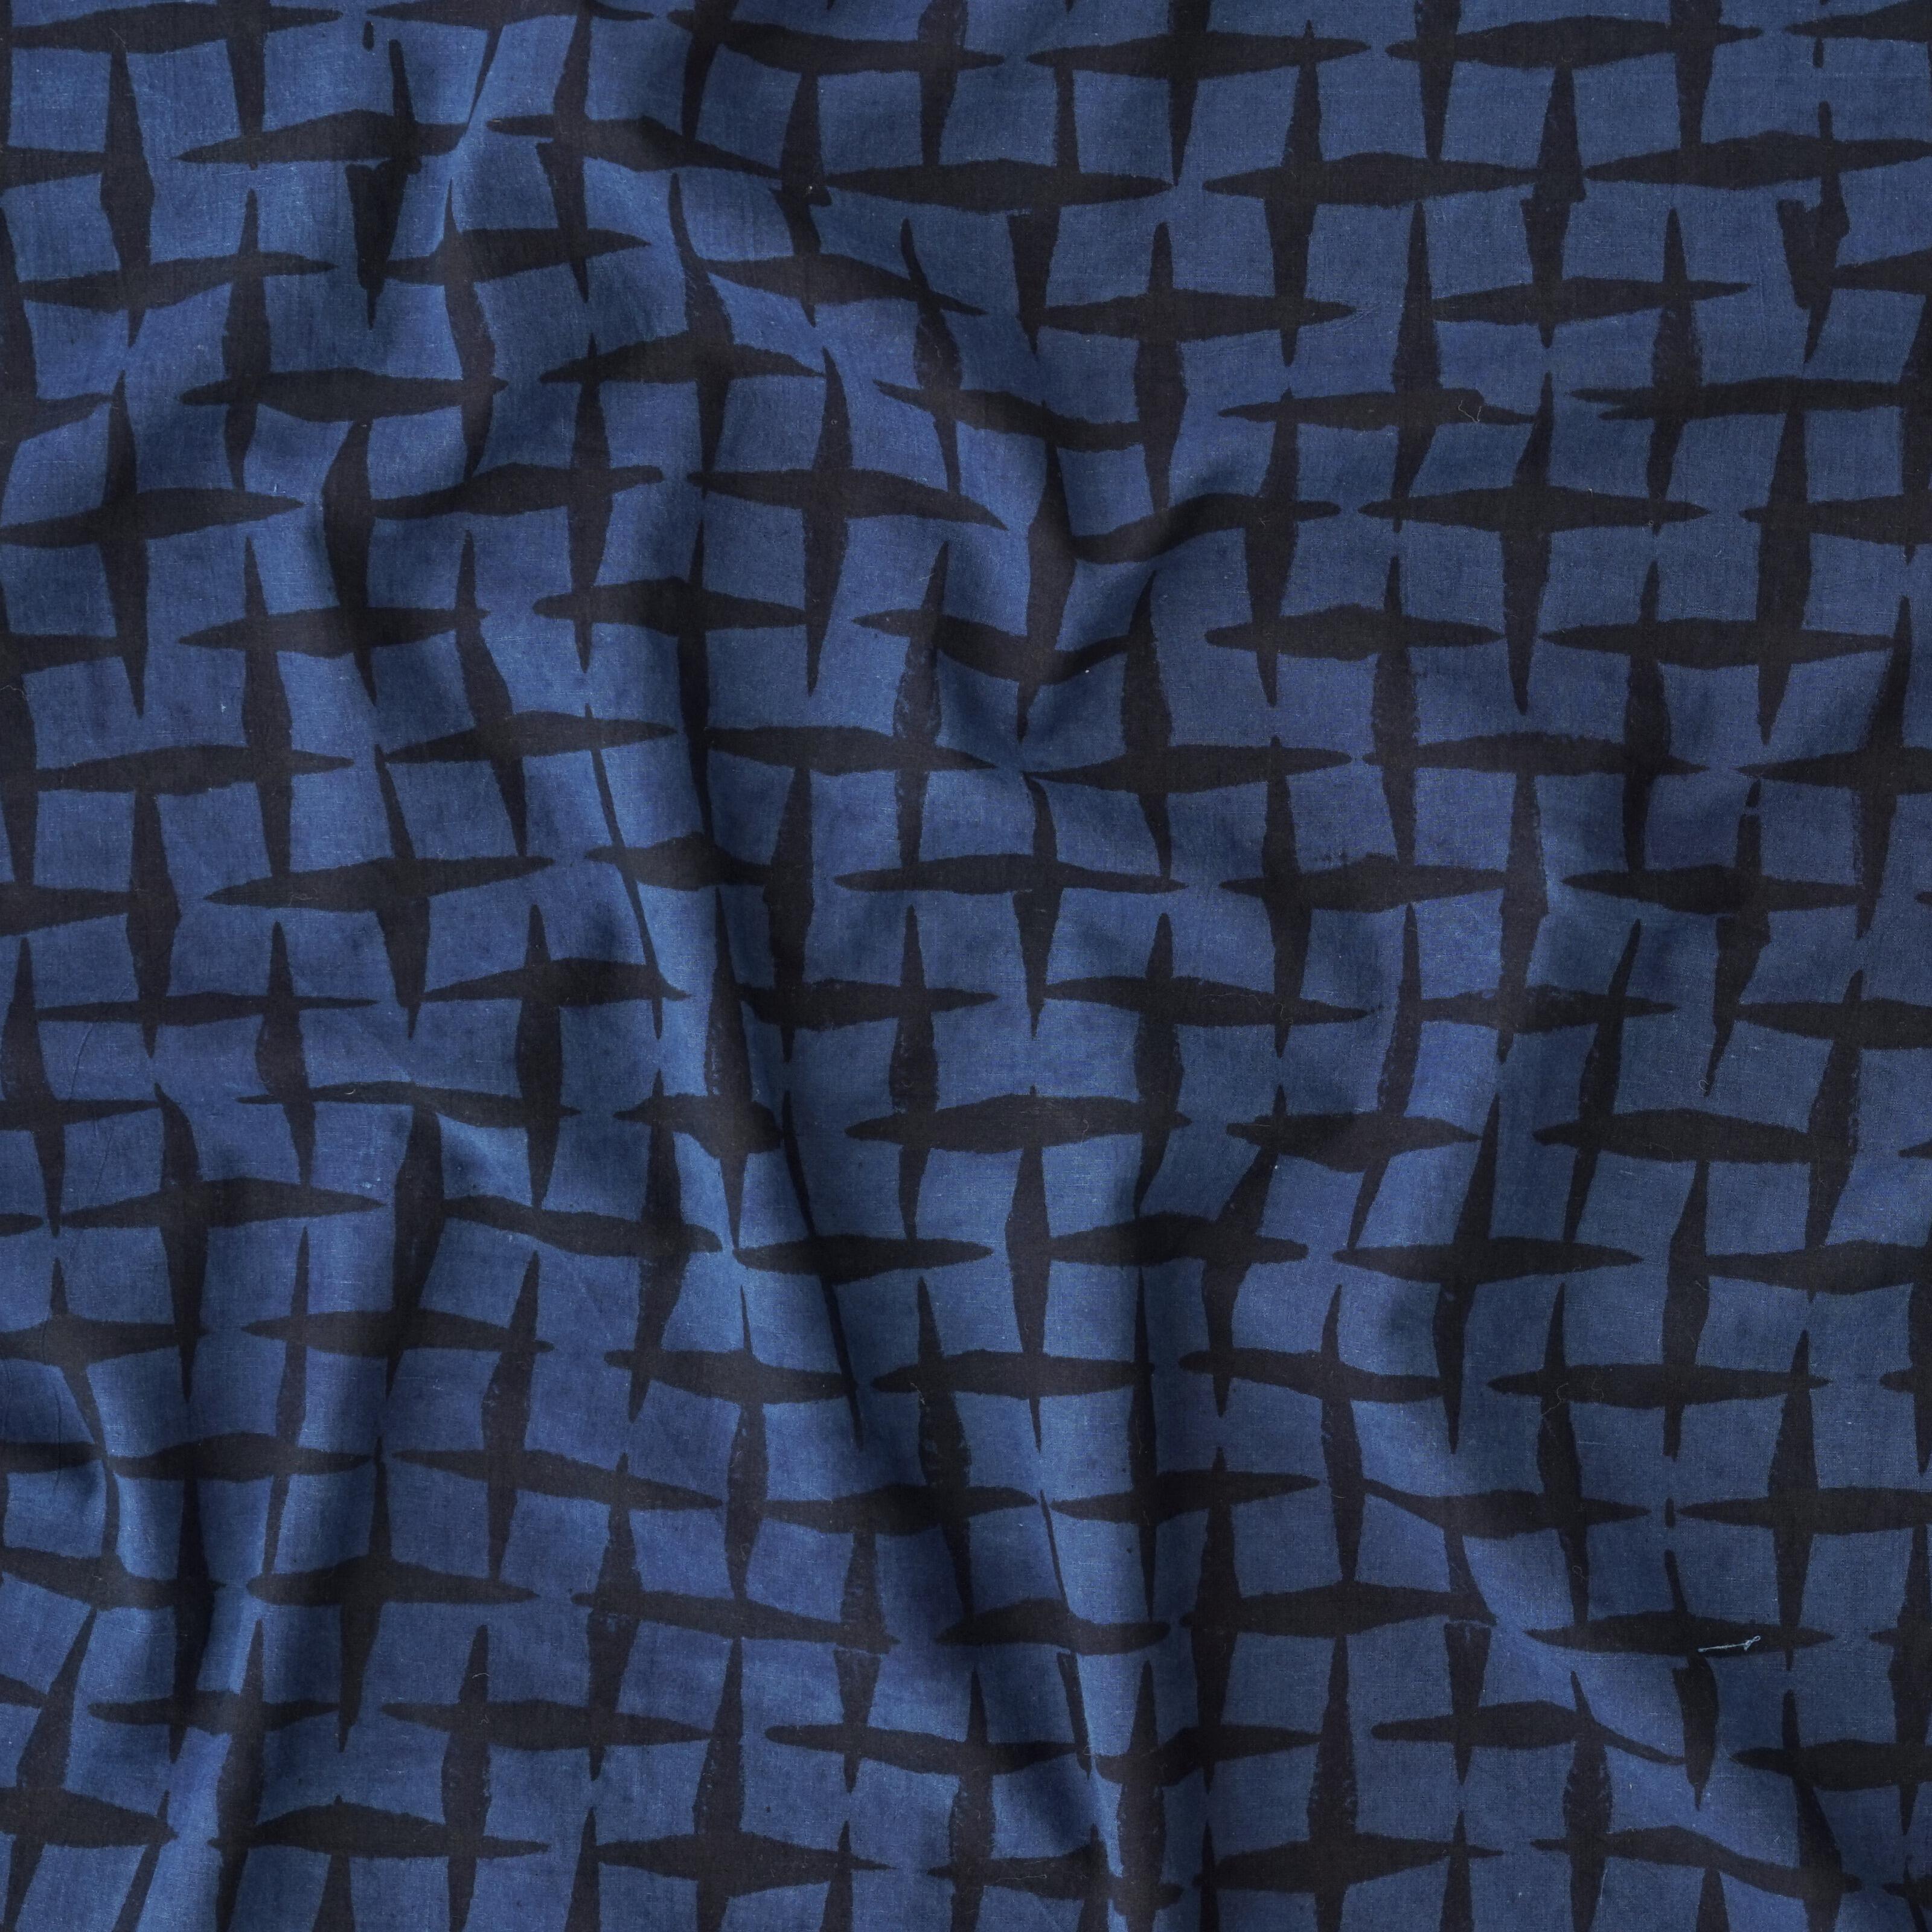 100% Block-Printed Cotton Fabric from India - Ajrak - Indigo Black Crosses Print - Contrast